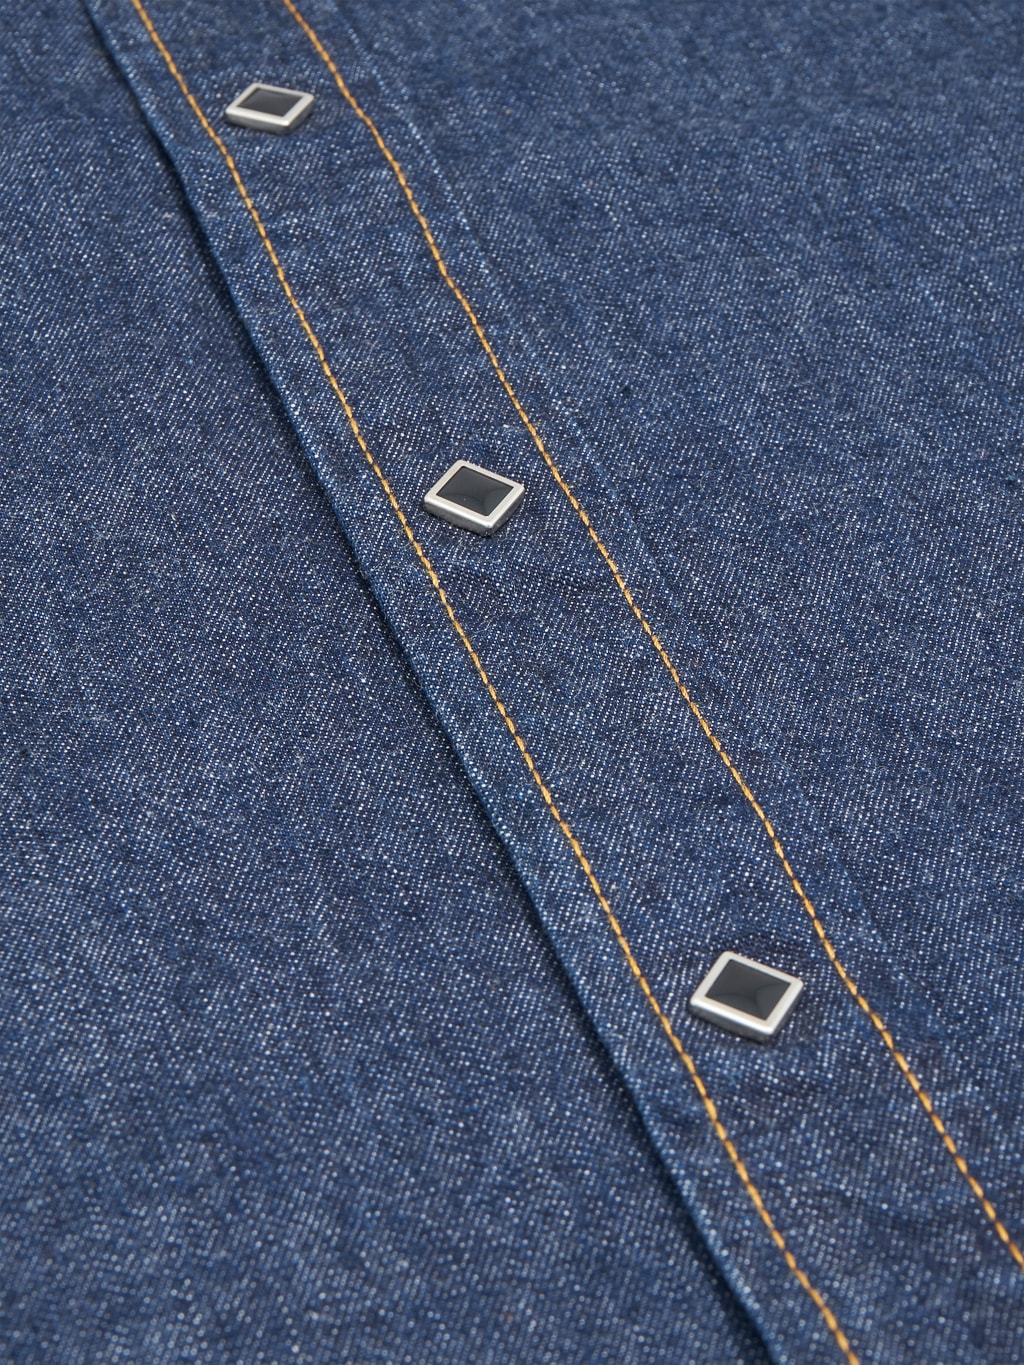 Samurai Jeans 10oz "Hisho SWD-L02" Selvedge Western Denim Shirt